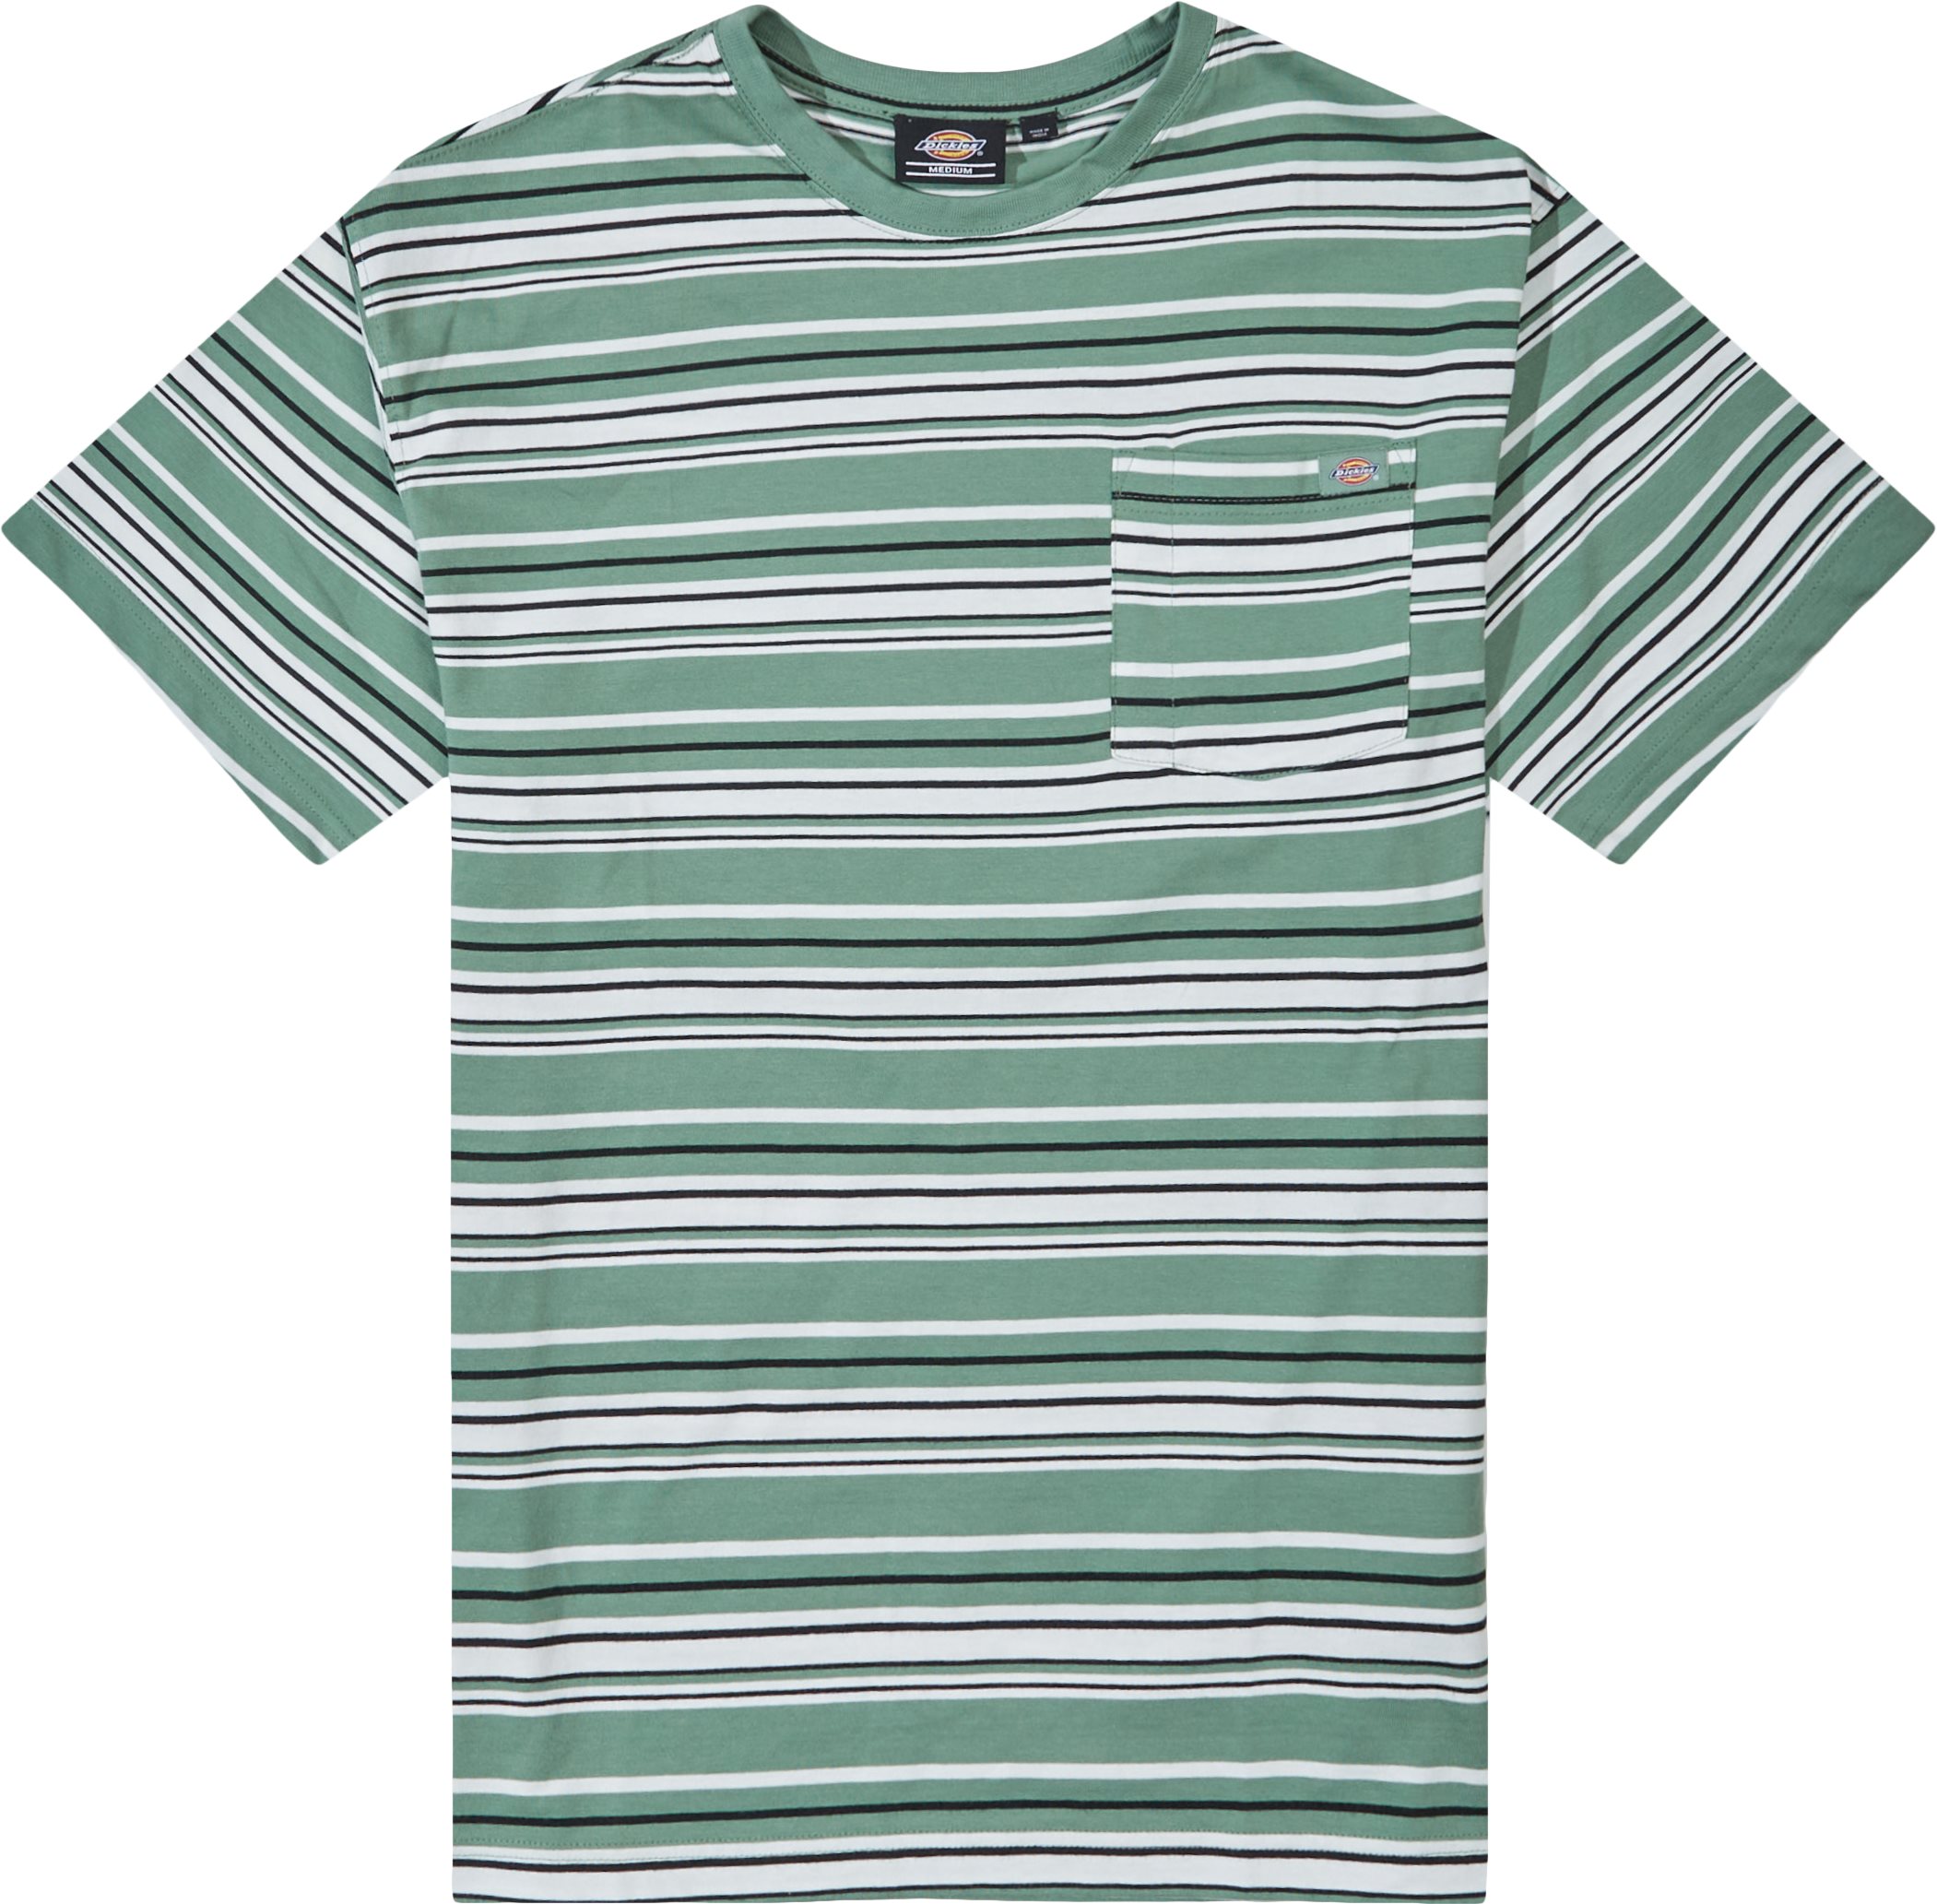 Westover Stripe - T-shirts - Regular fit - Grön